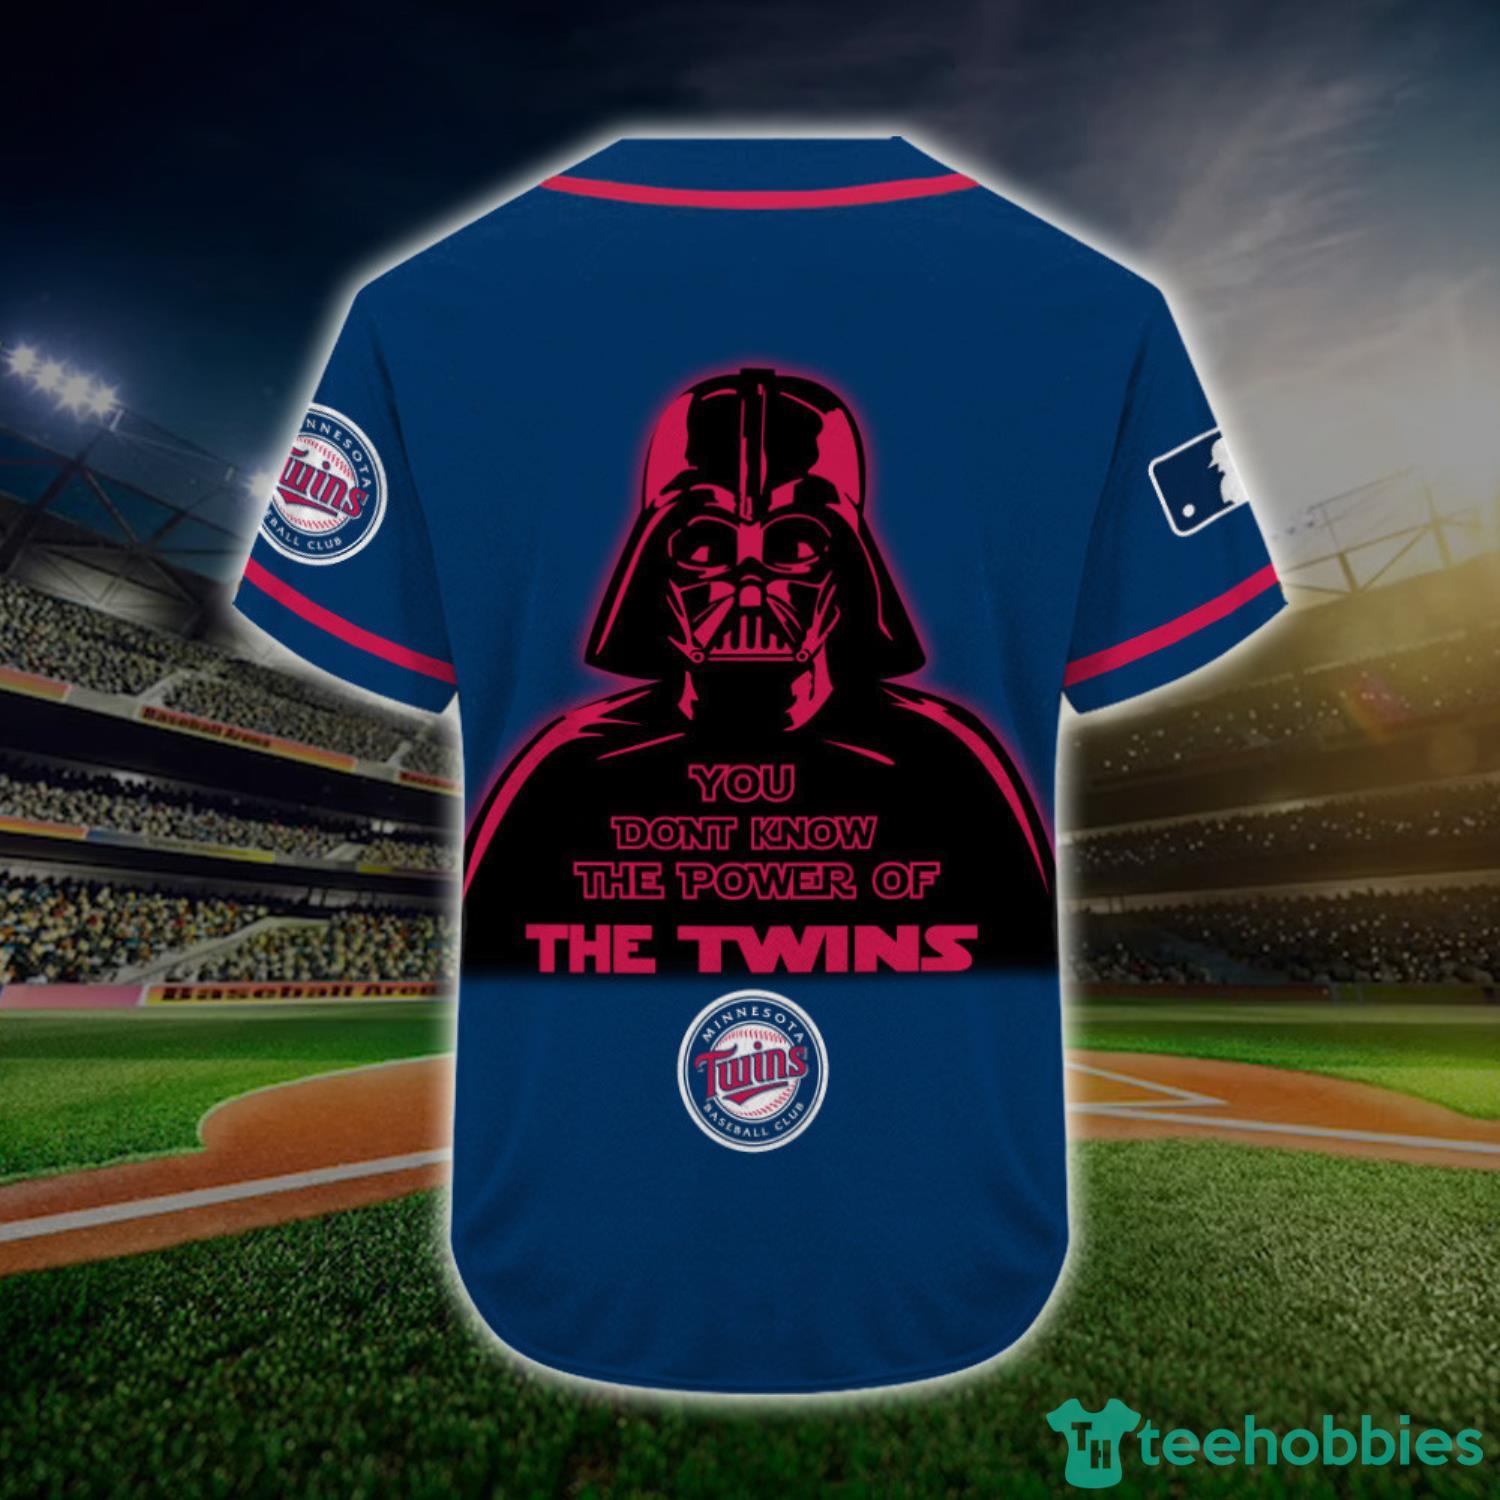 Custom Name And Number Minnesota Twins Darth Vader Star Wars